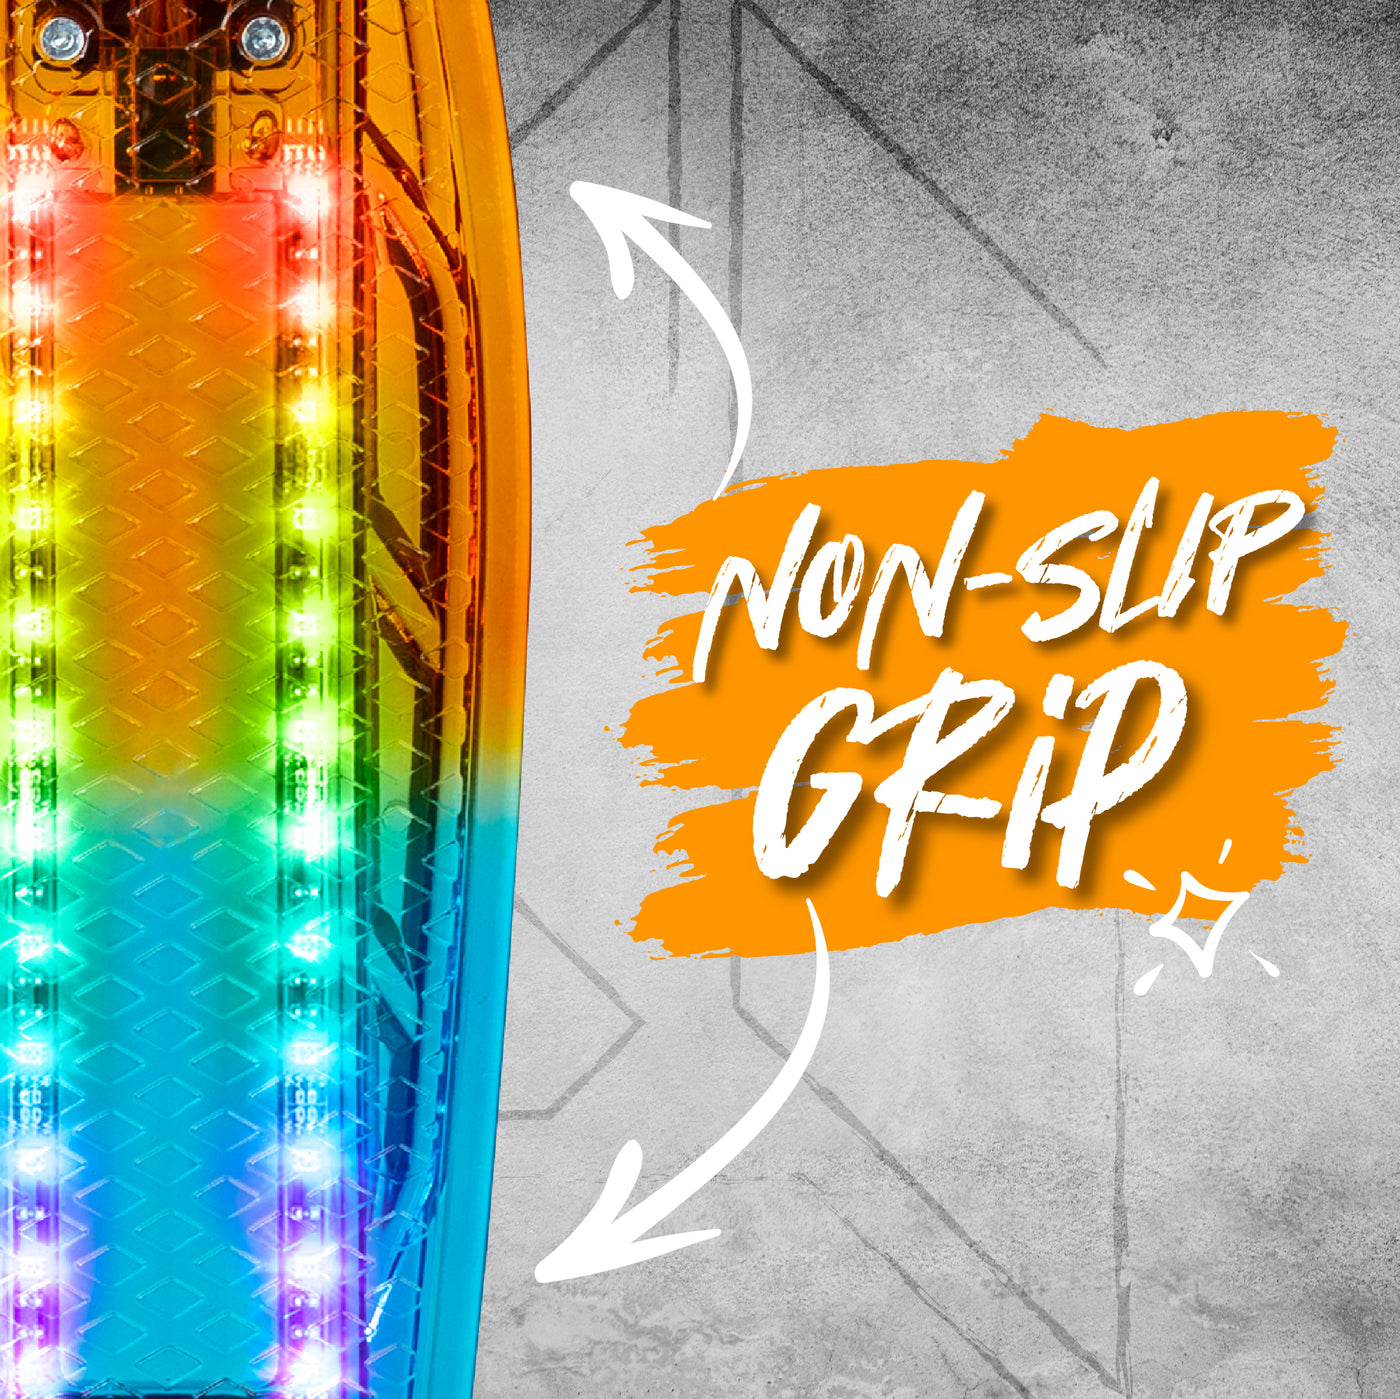 Madd Gear Retro Penny Board Skateboard Light-Up LED RGB Kids Children Boys Girls Grip Orange Teal